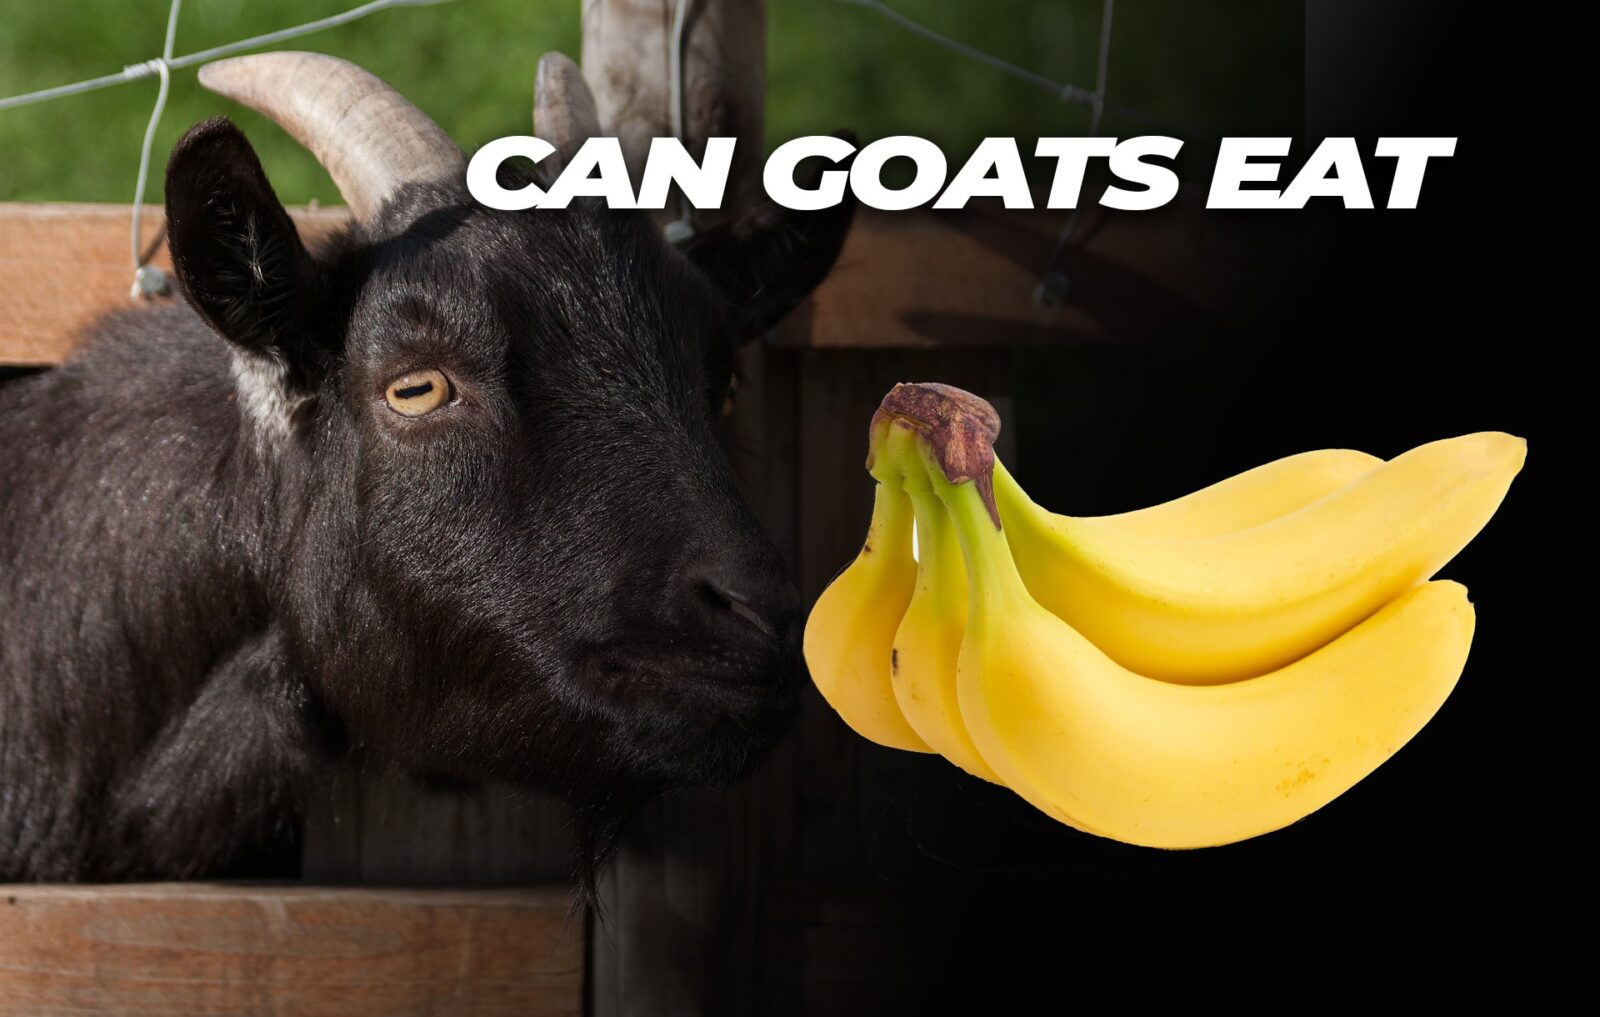 can goats eat bananas